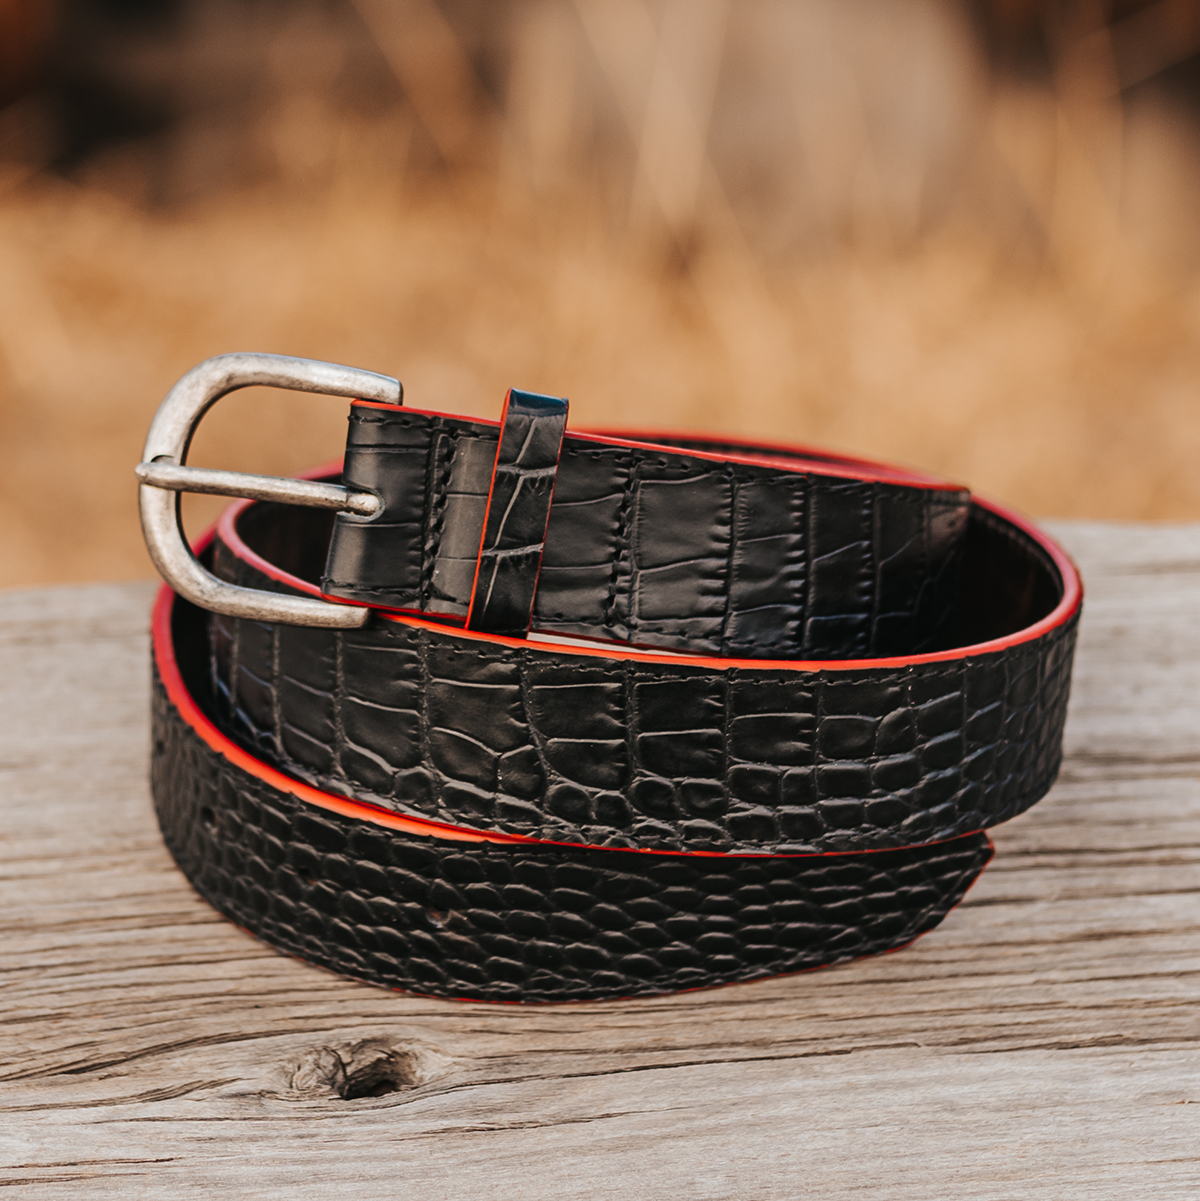 FREEBIRD Classic black croco full grain leather belt featuring silver buckle hardware